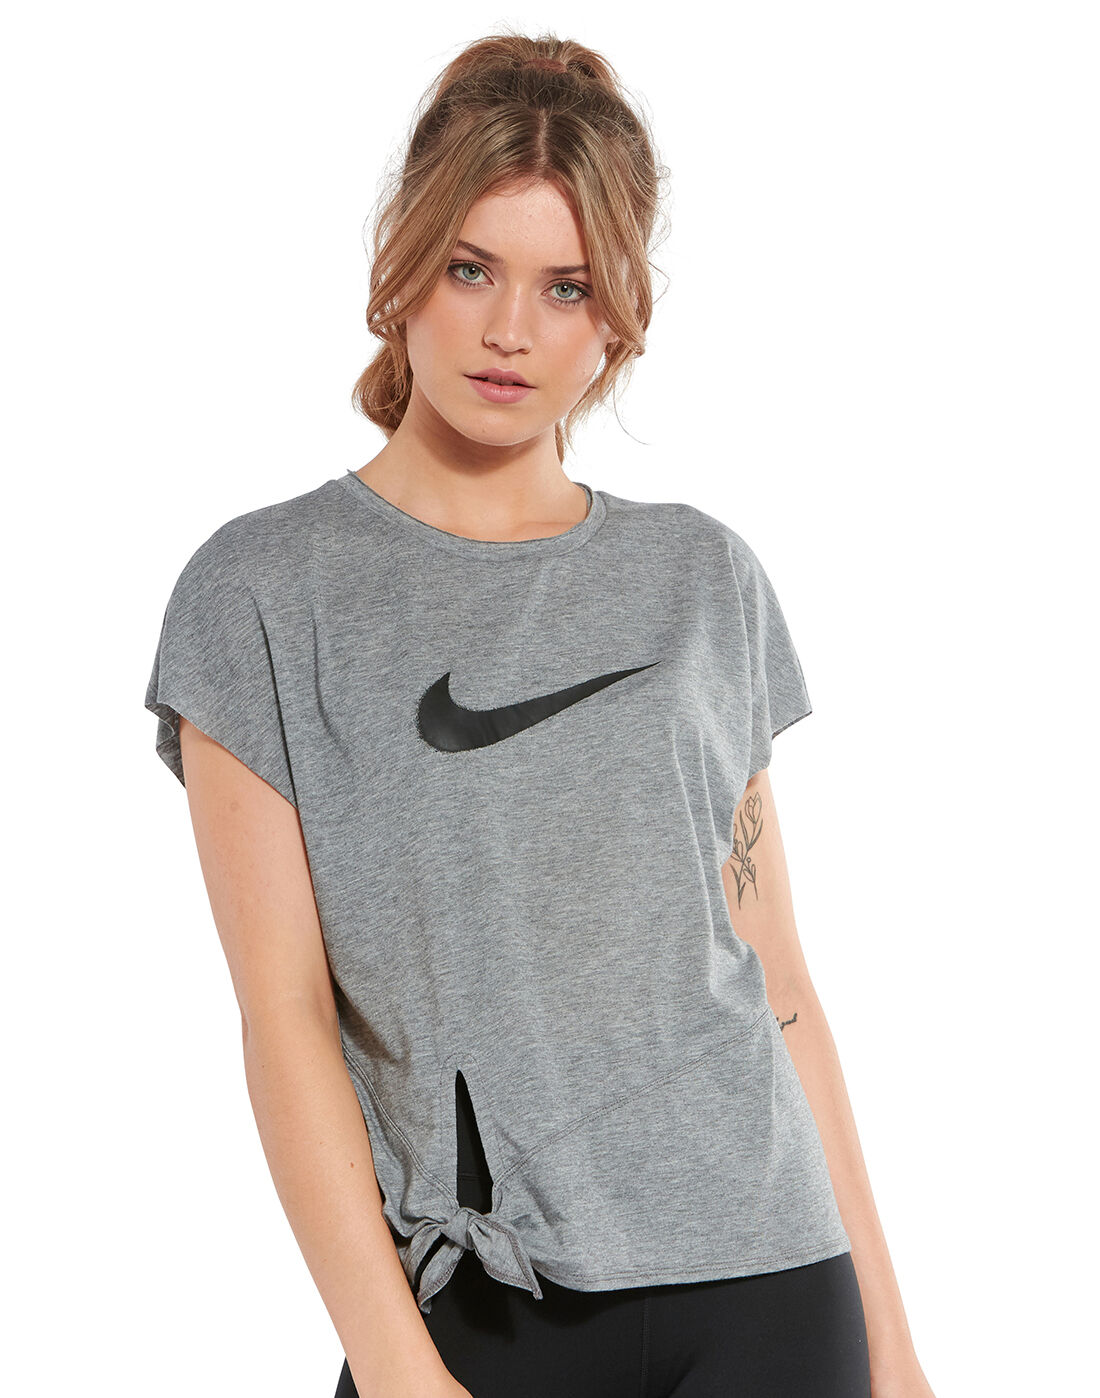 Nike Womens Dry Side Tie T-Shirt - Grey 